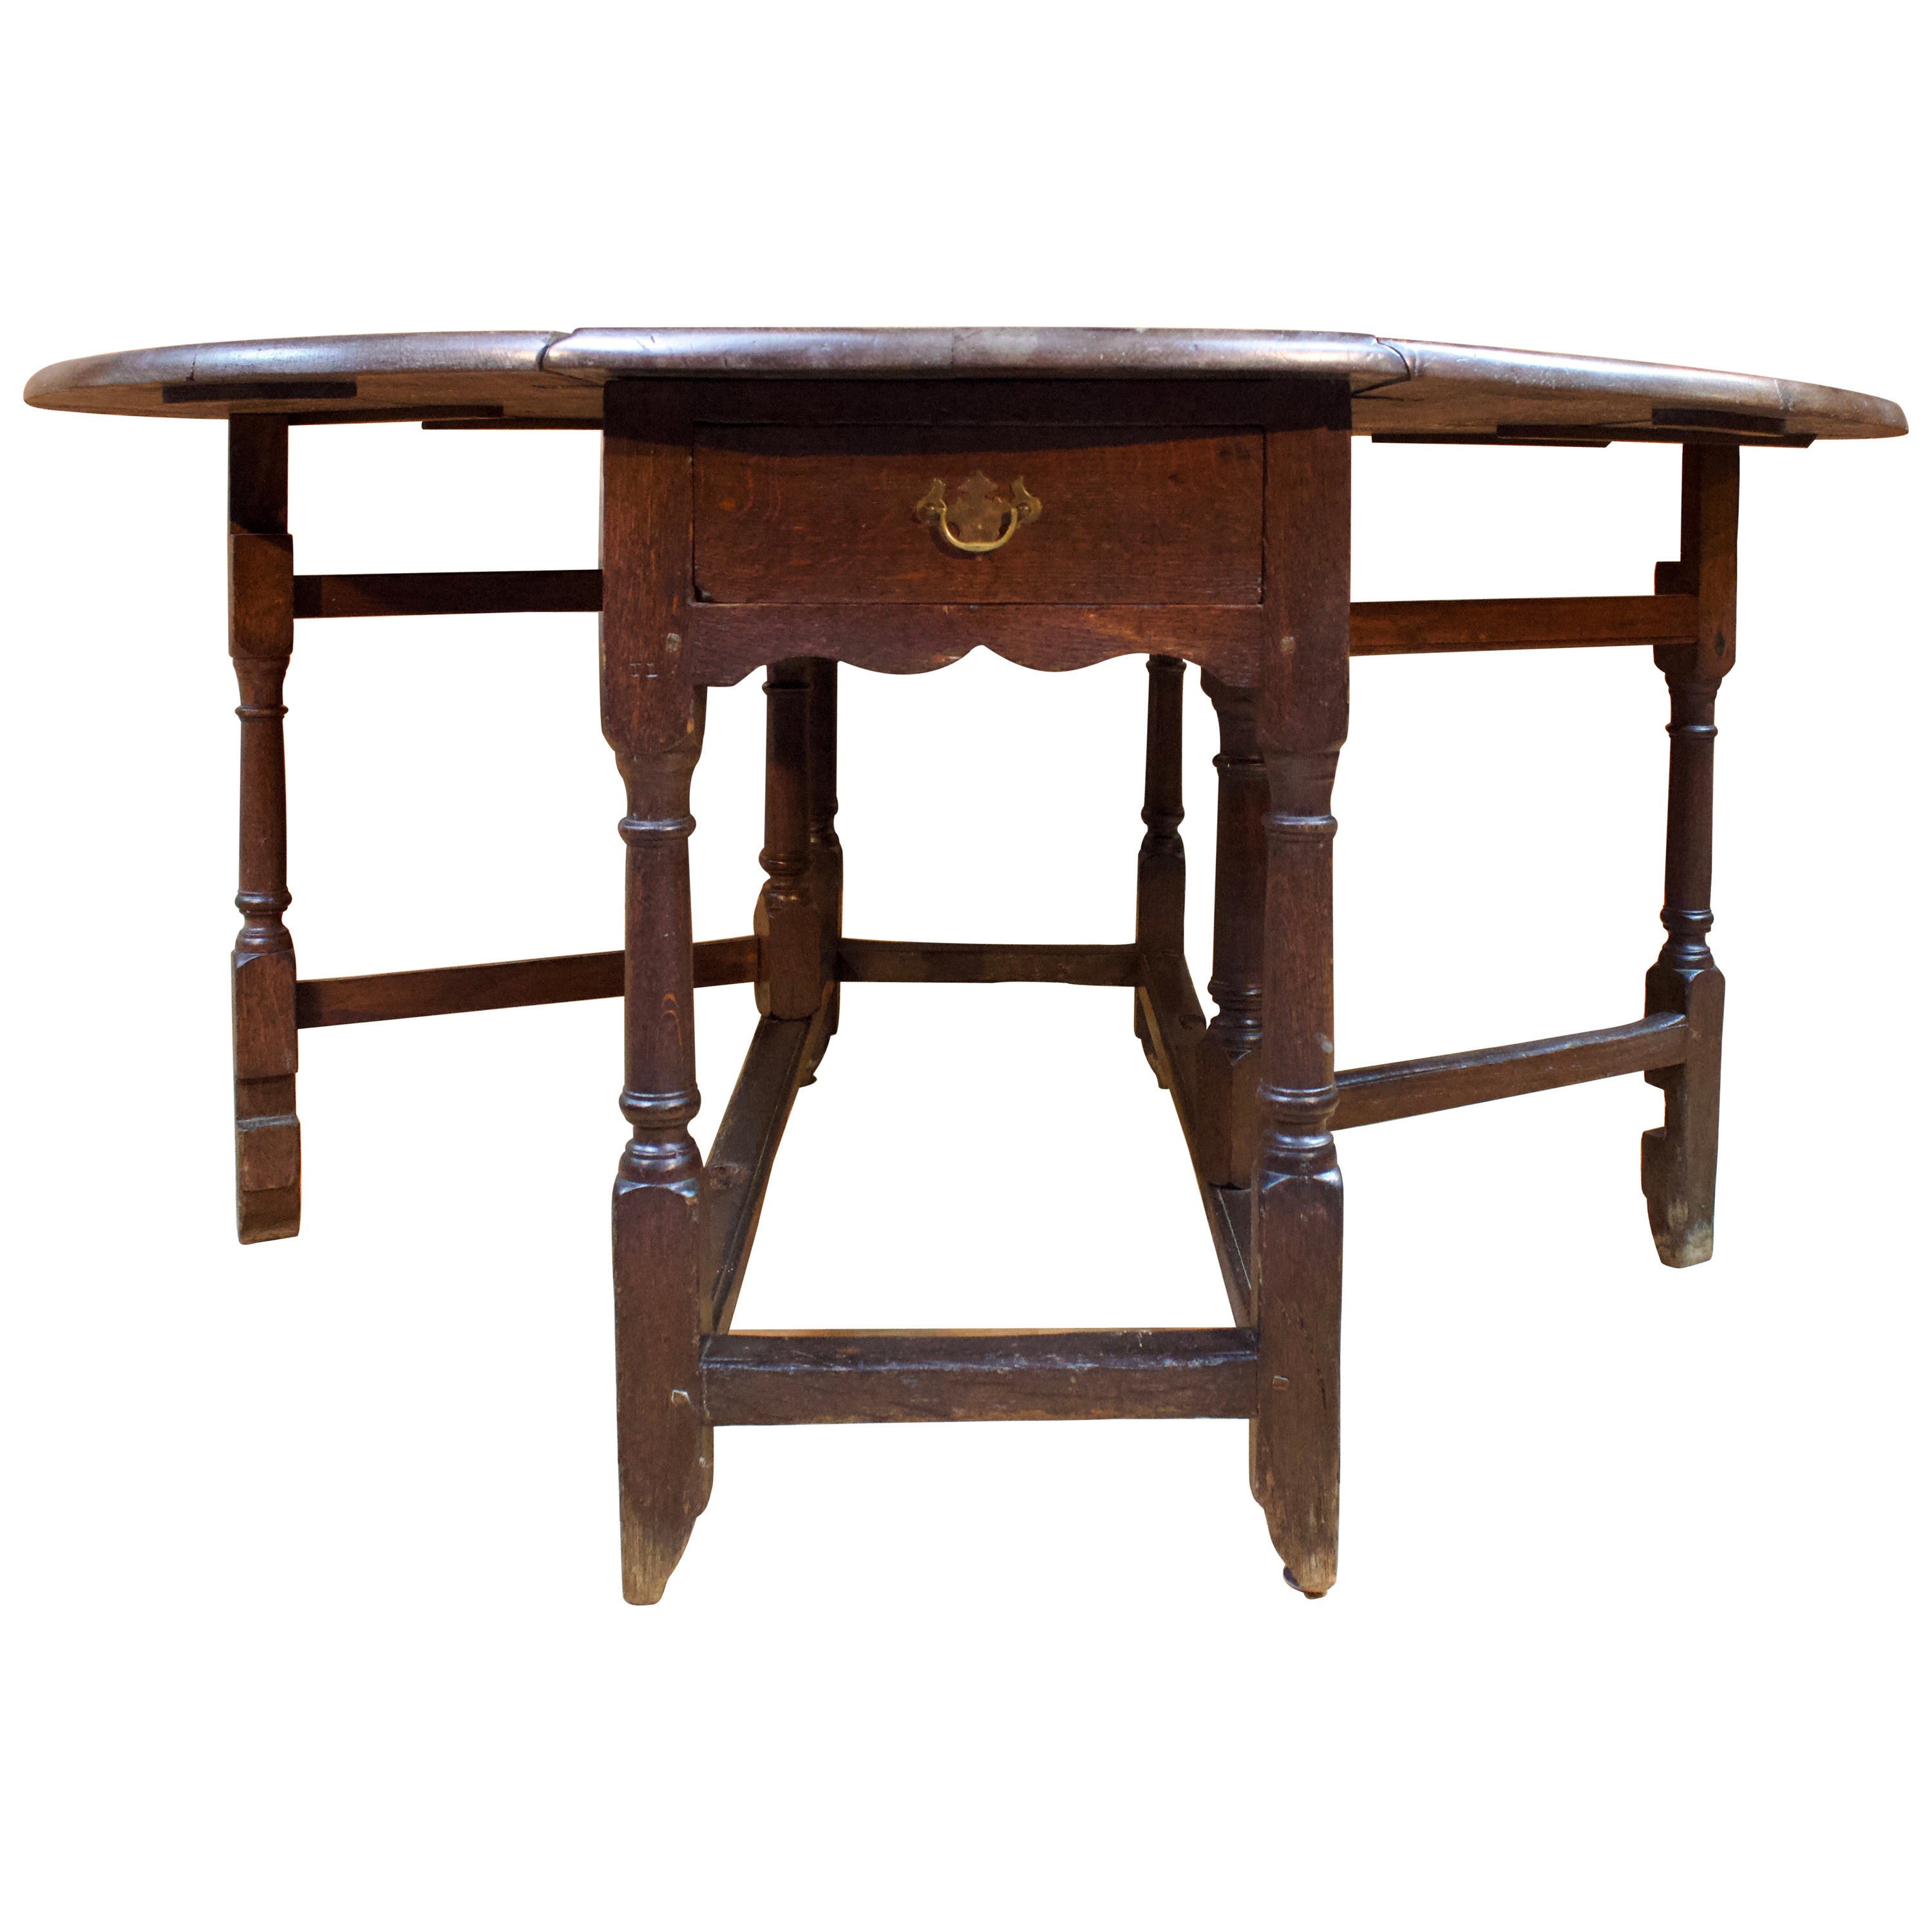 Table anglaise pliante en bois de chêne, 18e siècle, Angleterre 